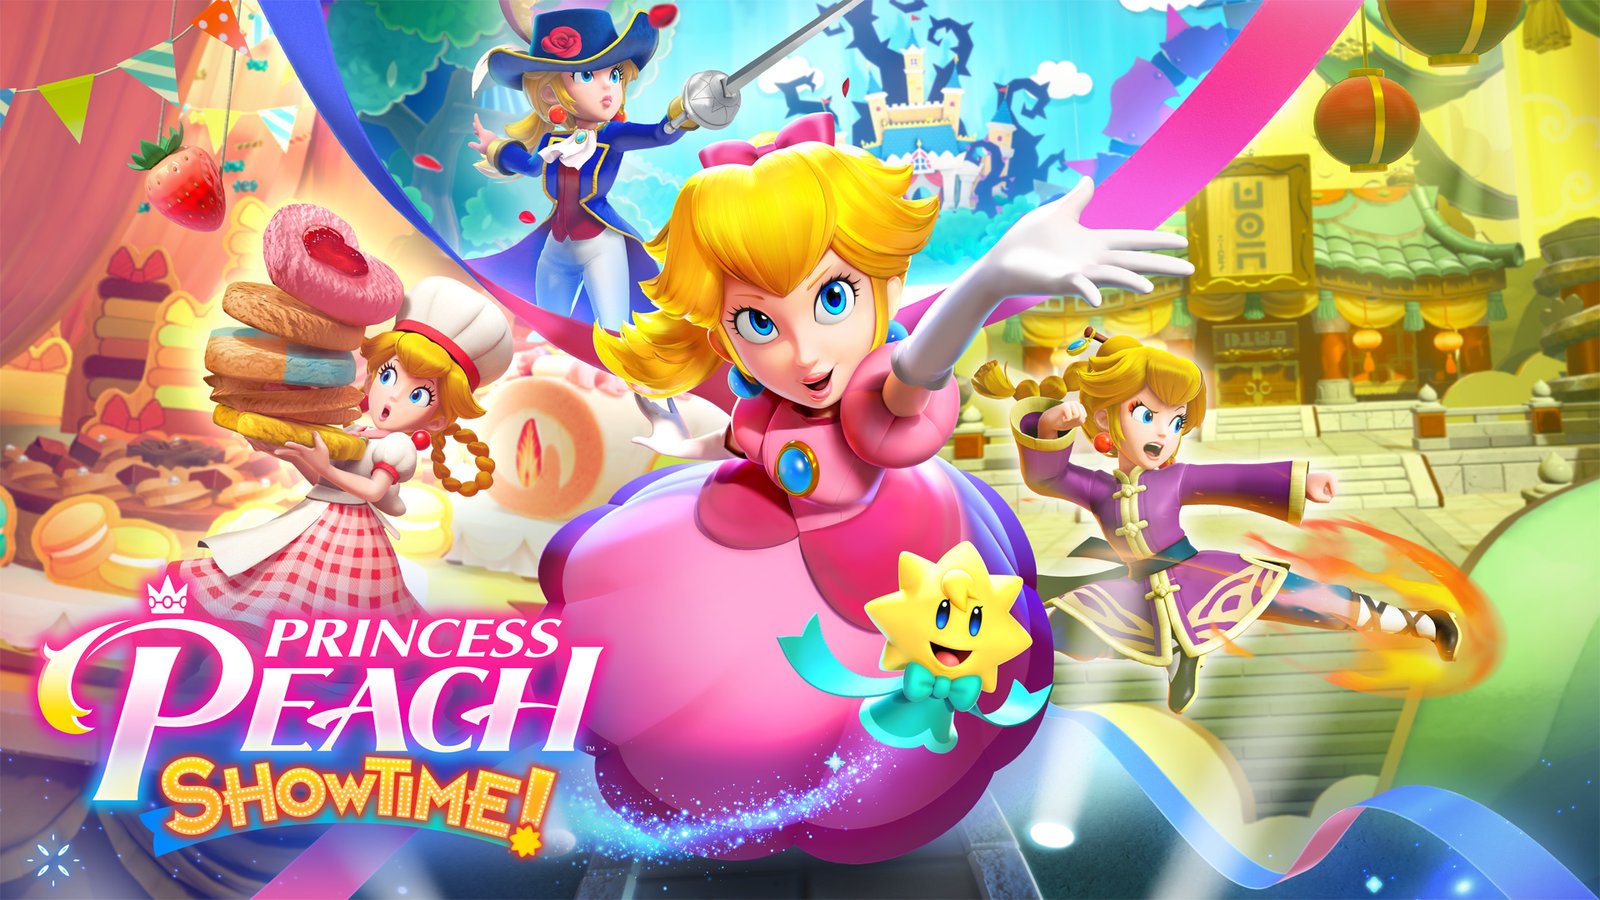 Princess Peach: Showtime حاكمة مملكة الفطر تستعرض خزانة ملابسها في عرض دعائي جديد